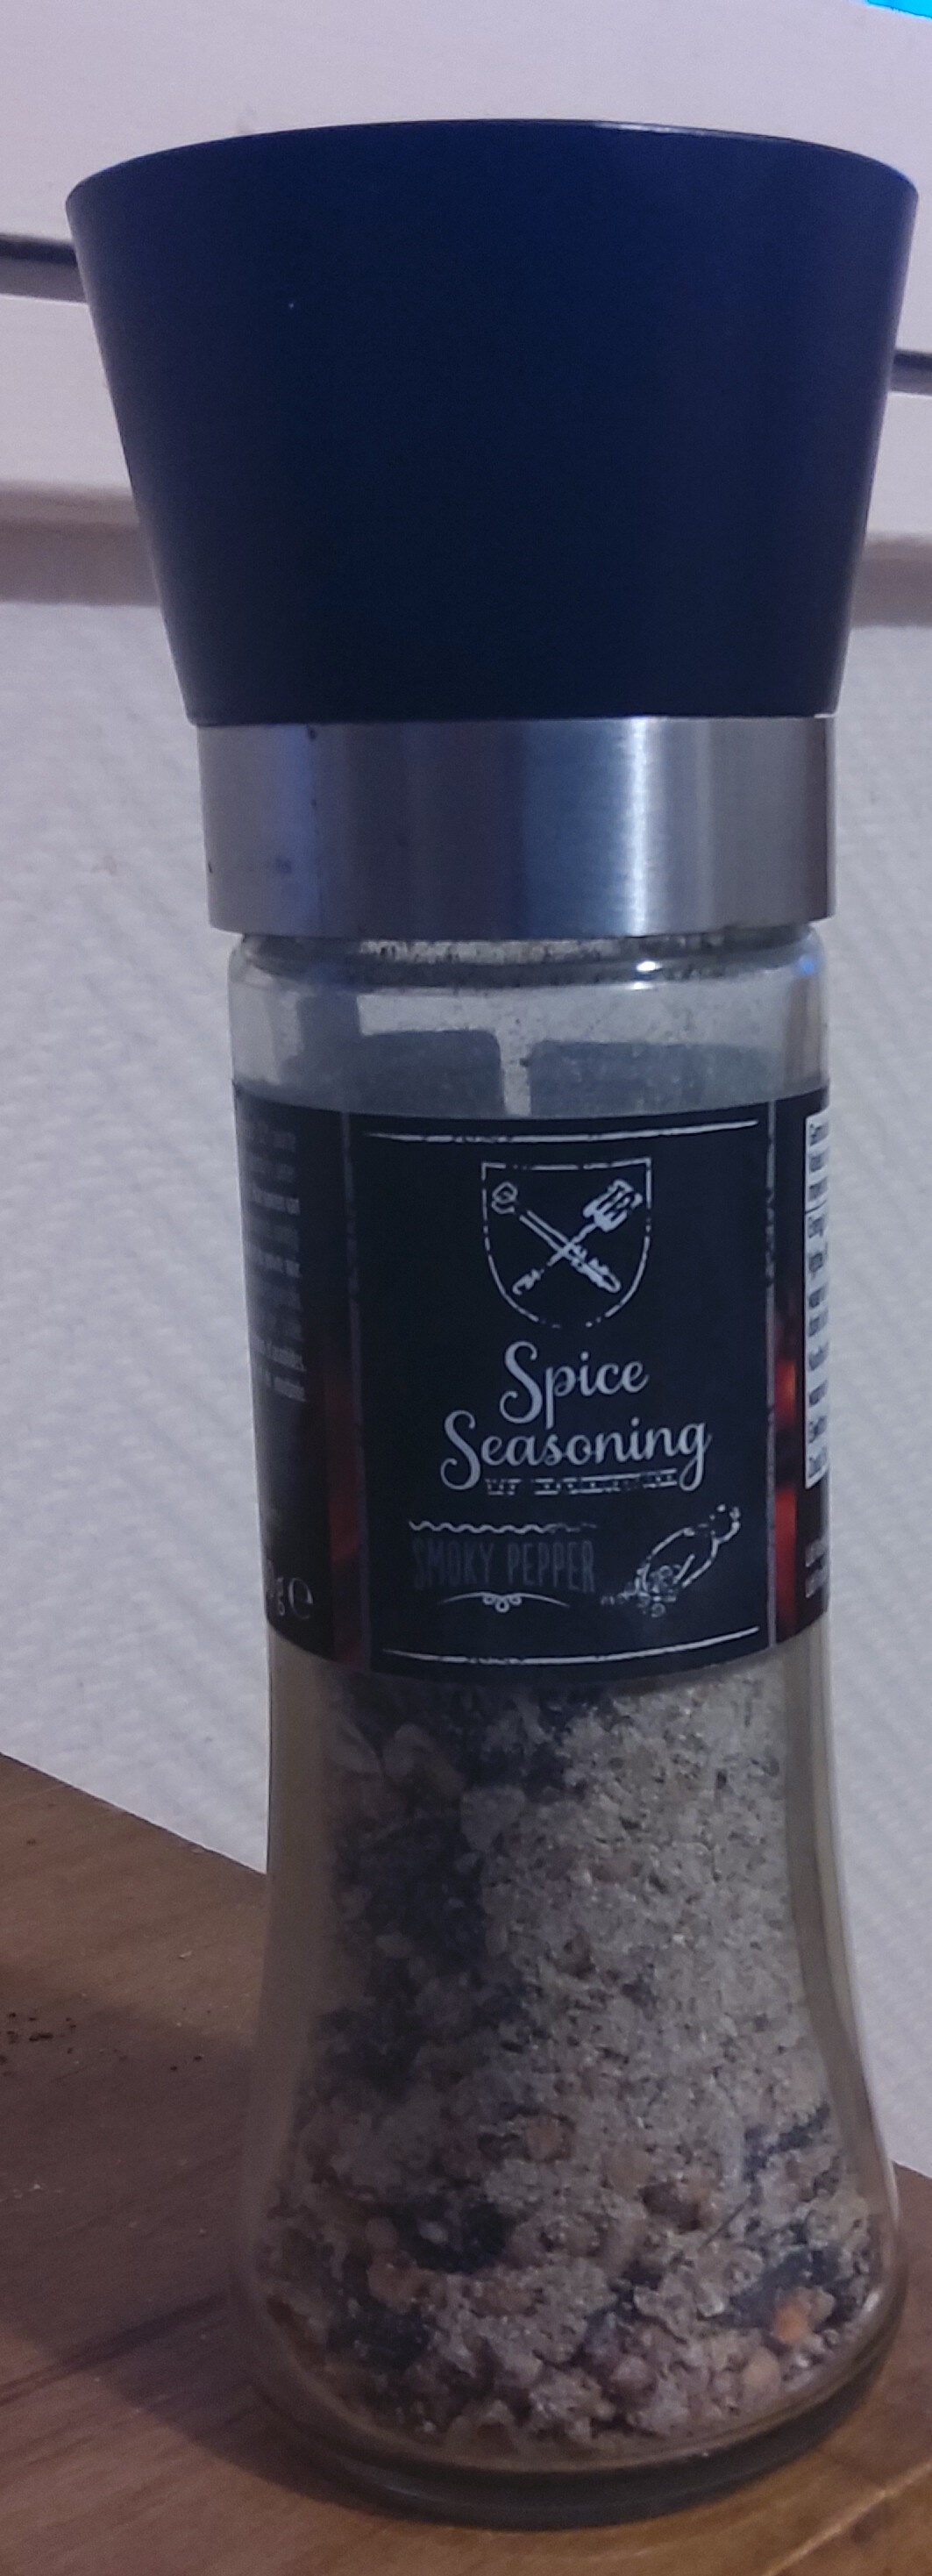 Spice Seasoning - Produkt - en